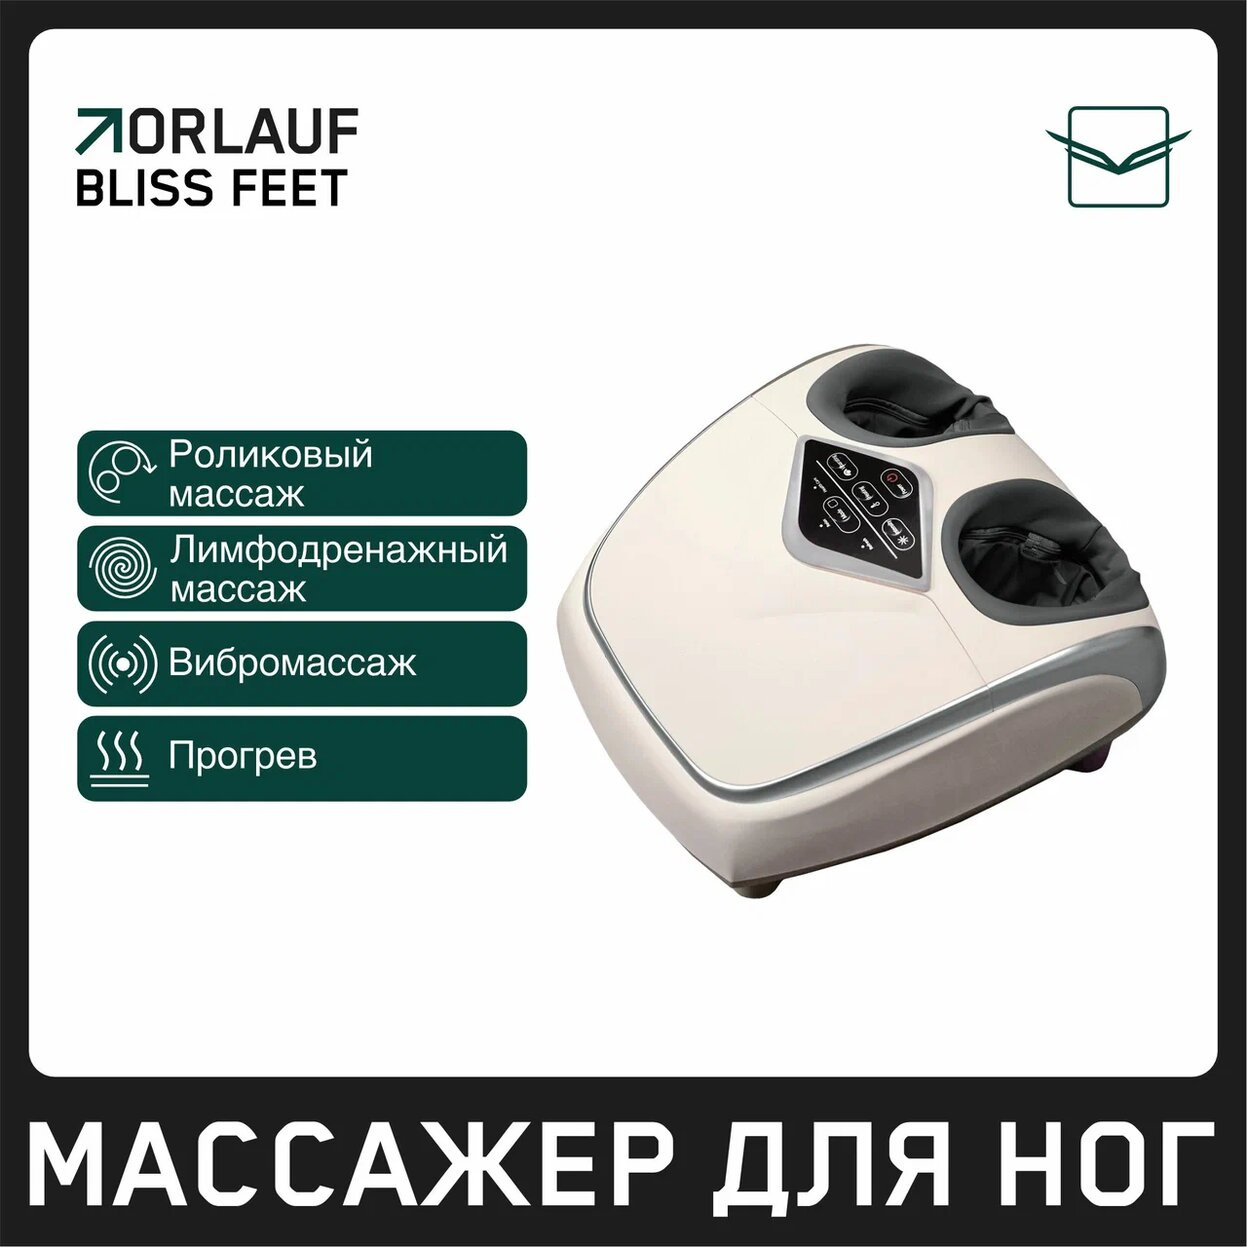 Orlauf Bliss Feet из каталога устройств для массажа в Санкт-Петербурге по цене 27600 ₽